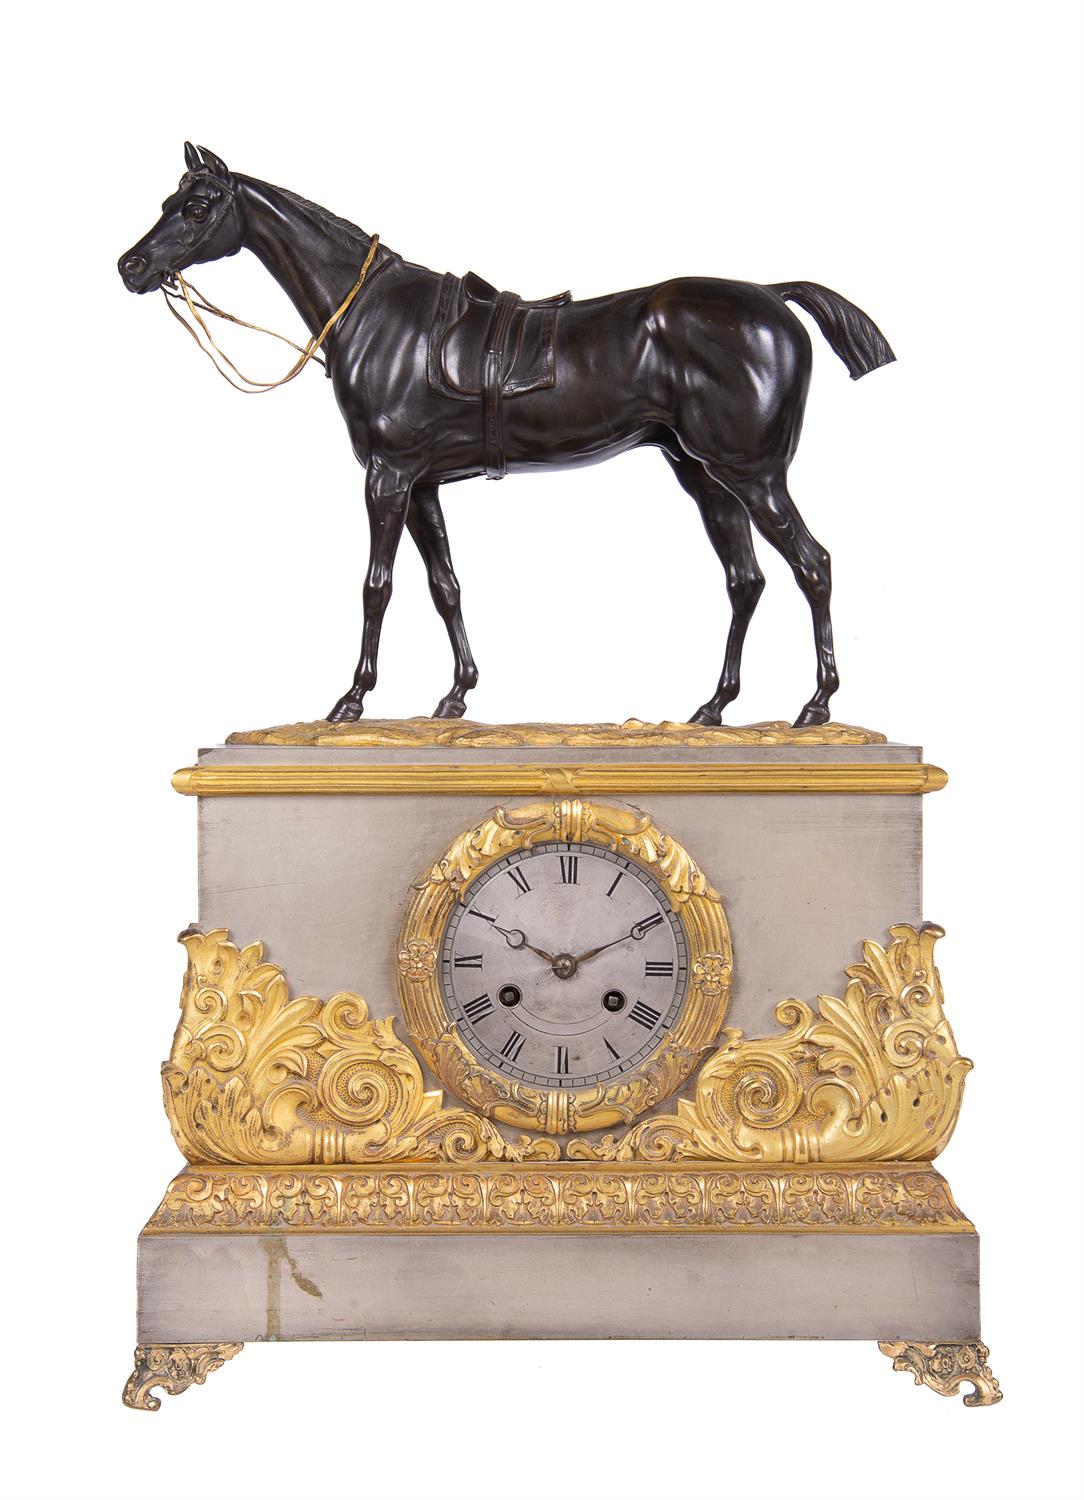 A French Louis Philippe bronze equestrian mantle clock, Dupont, Paris, circa 1840